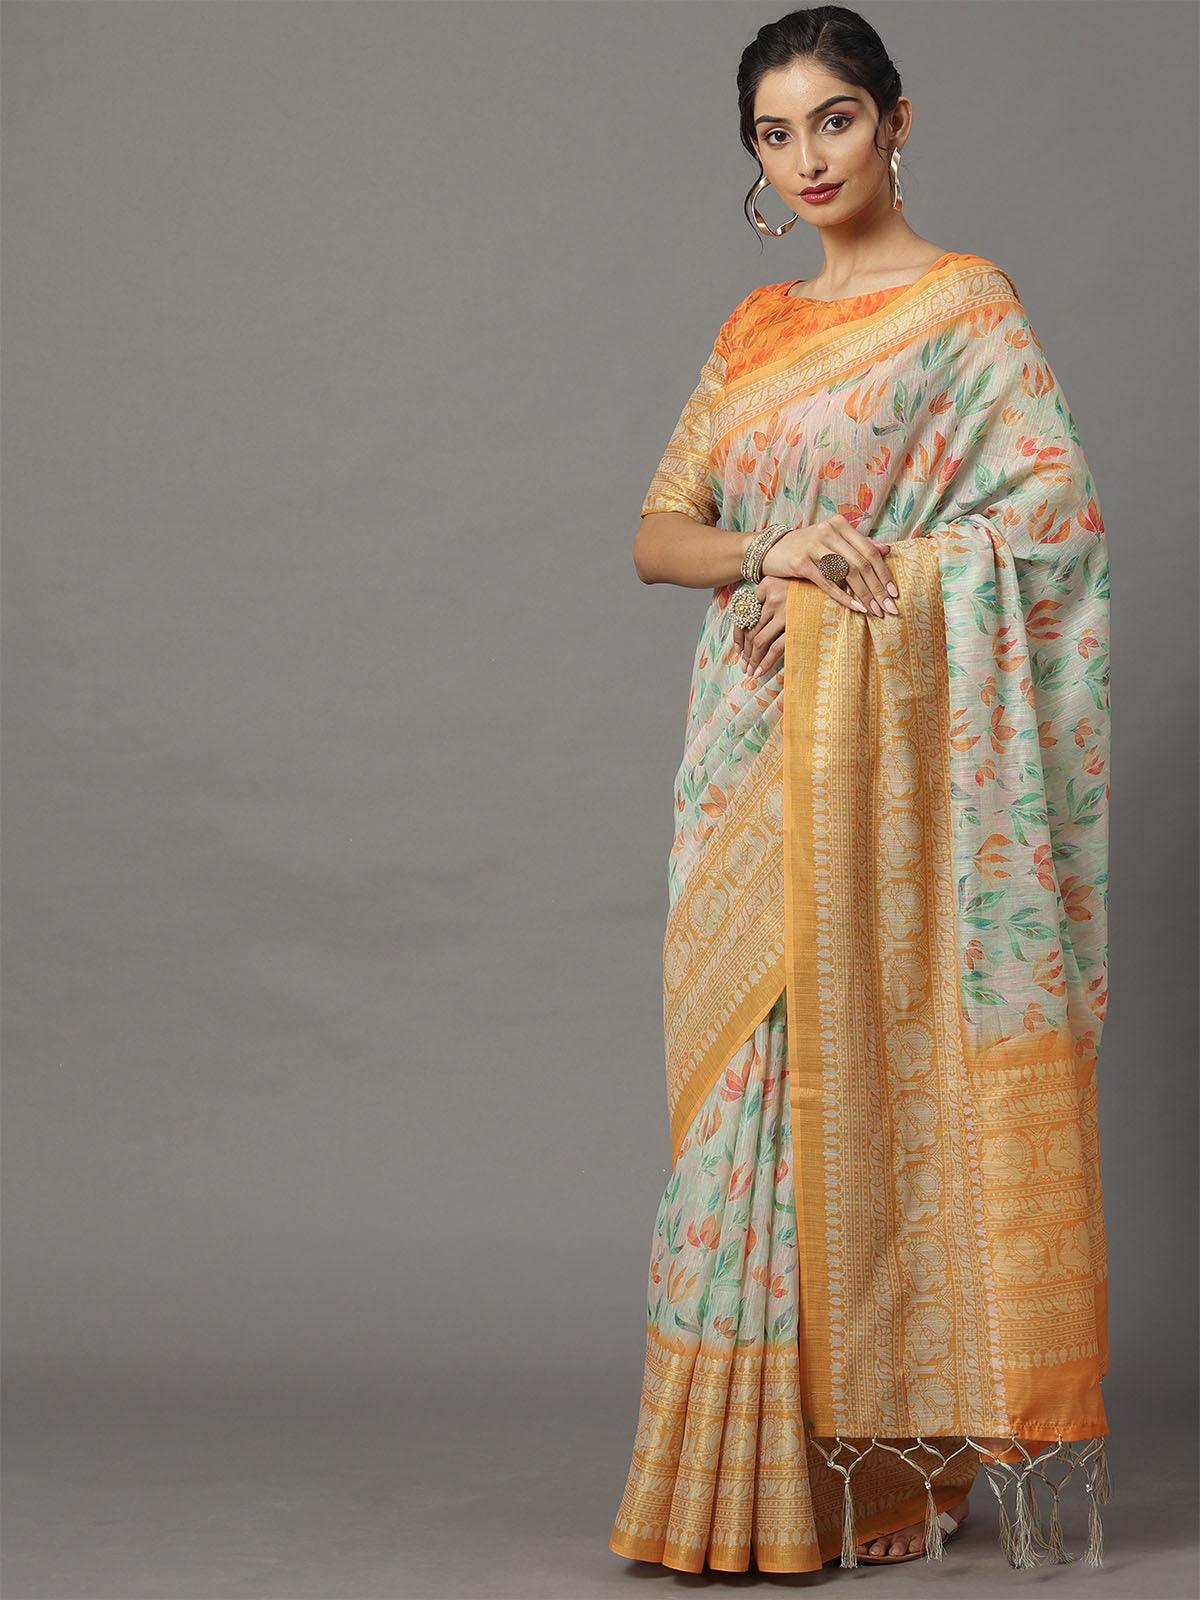 Women's Soft Silk Off White Printed Designer Saree With Blouse Piece - Odette